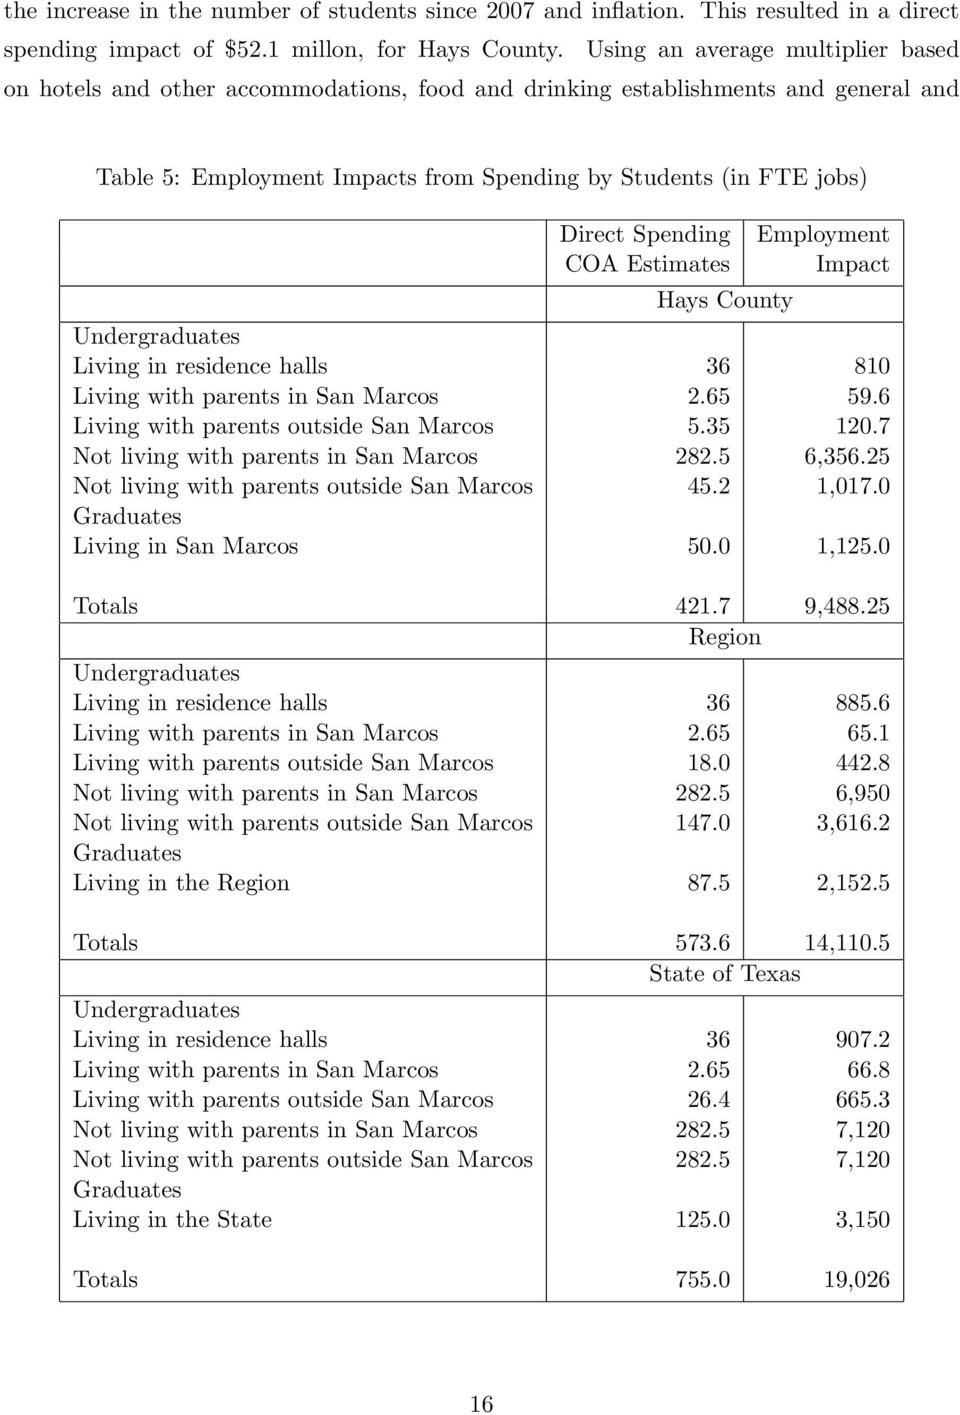 Spending COA Estimates Hays County Employment Impact Undergraduates Living in residence halls 36 810 Living with parents in San Marcos 2.65 59.6 Living with parents outside San Marcos 5.35 120.